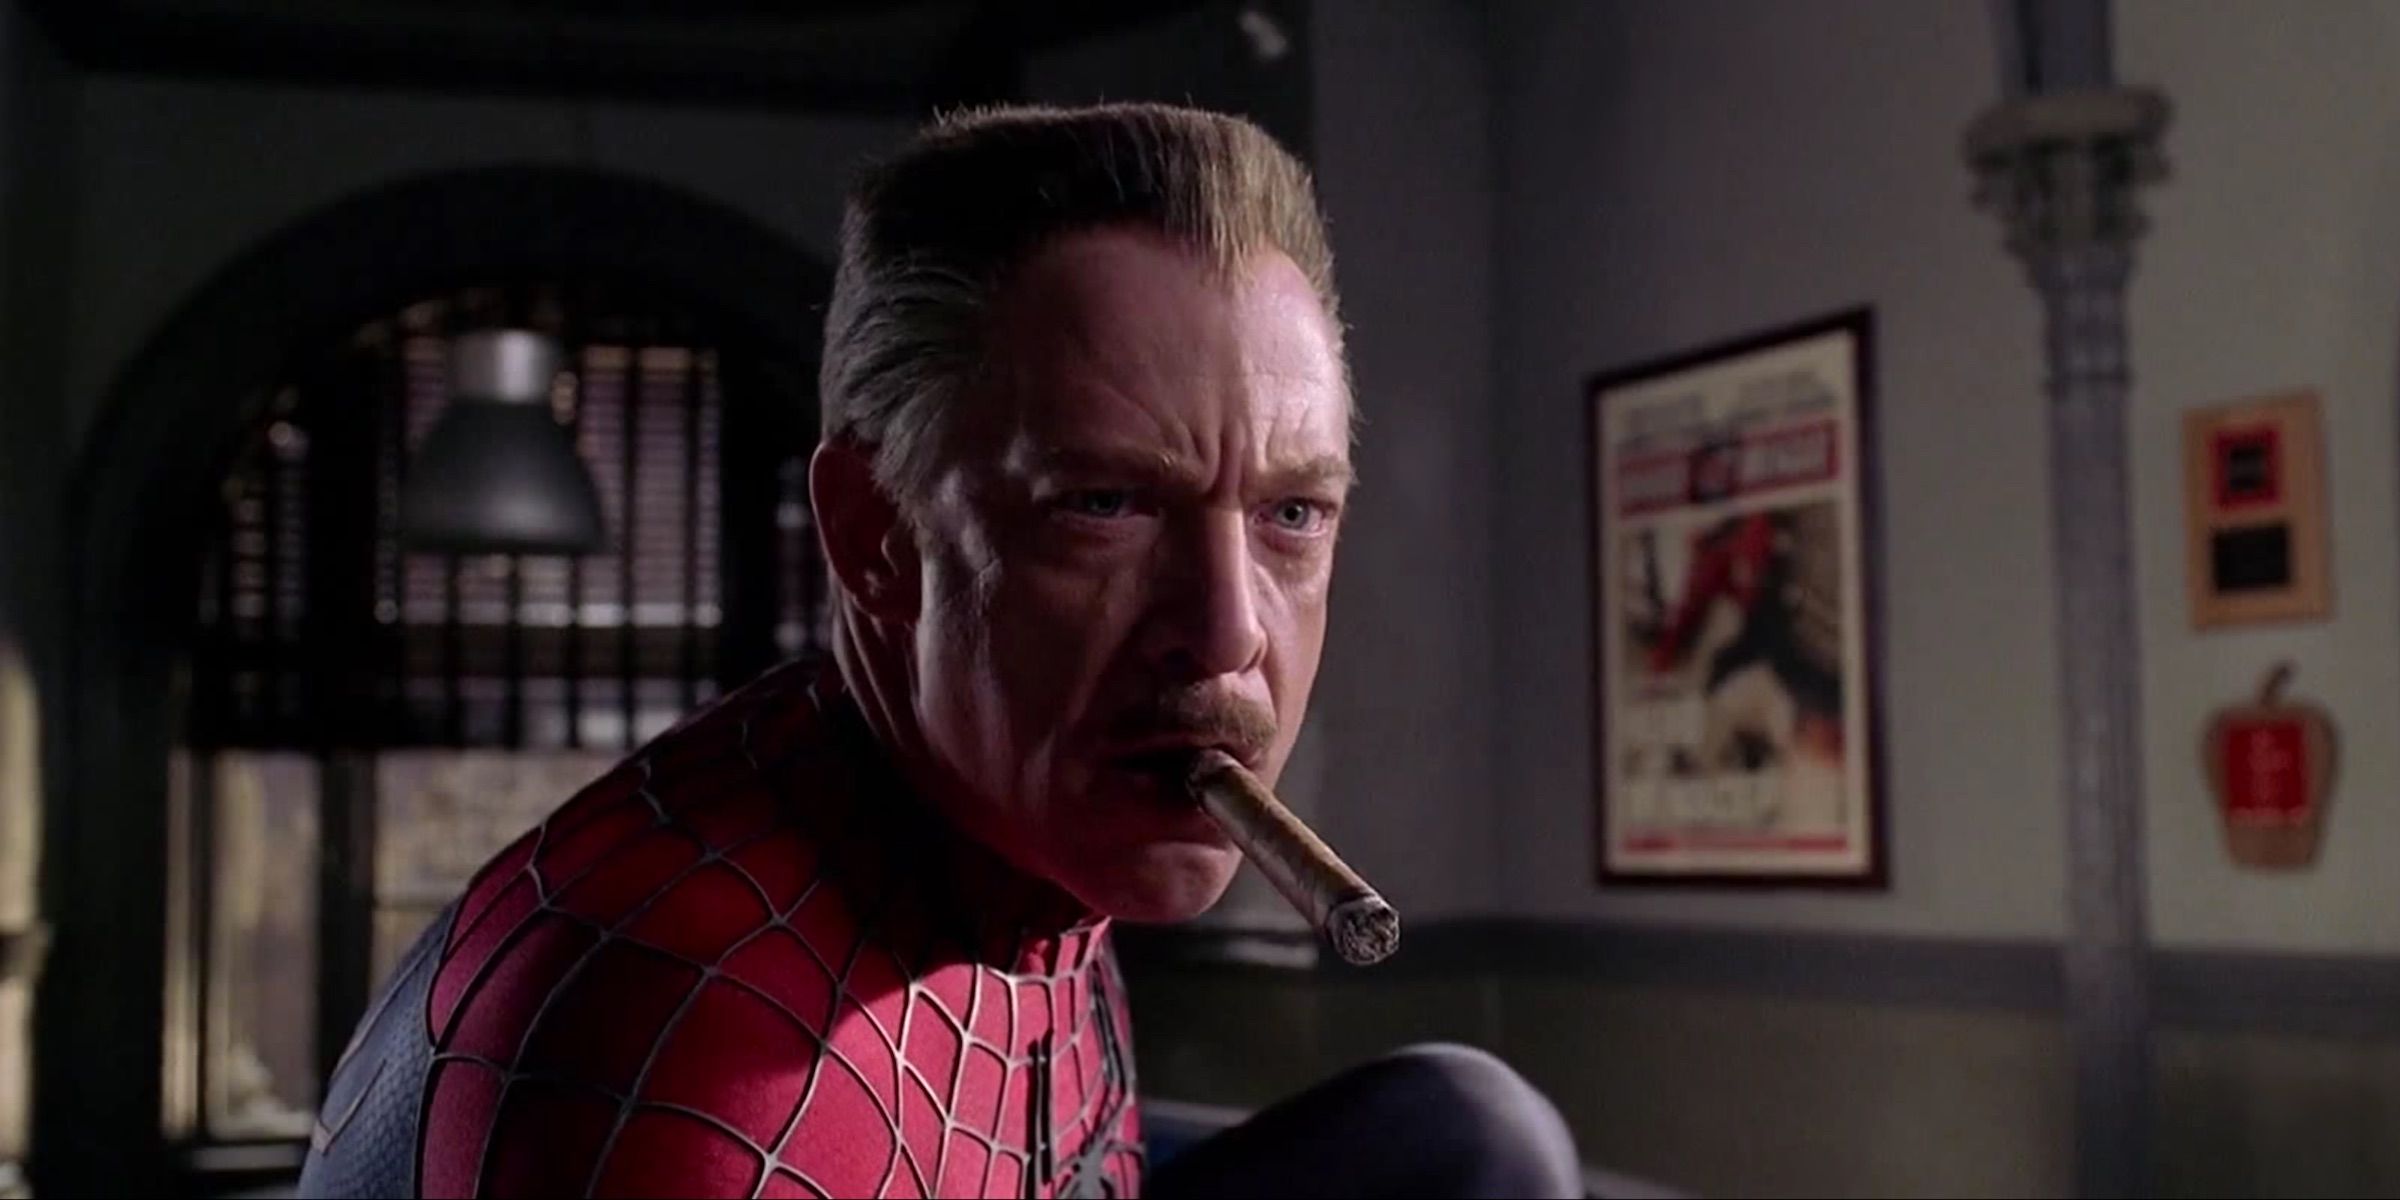 JK Simmons as Jonah Jameson dressed as Spider-Man